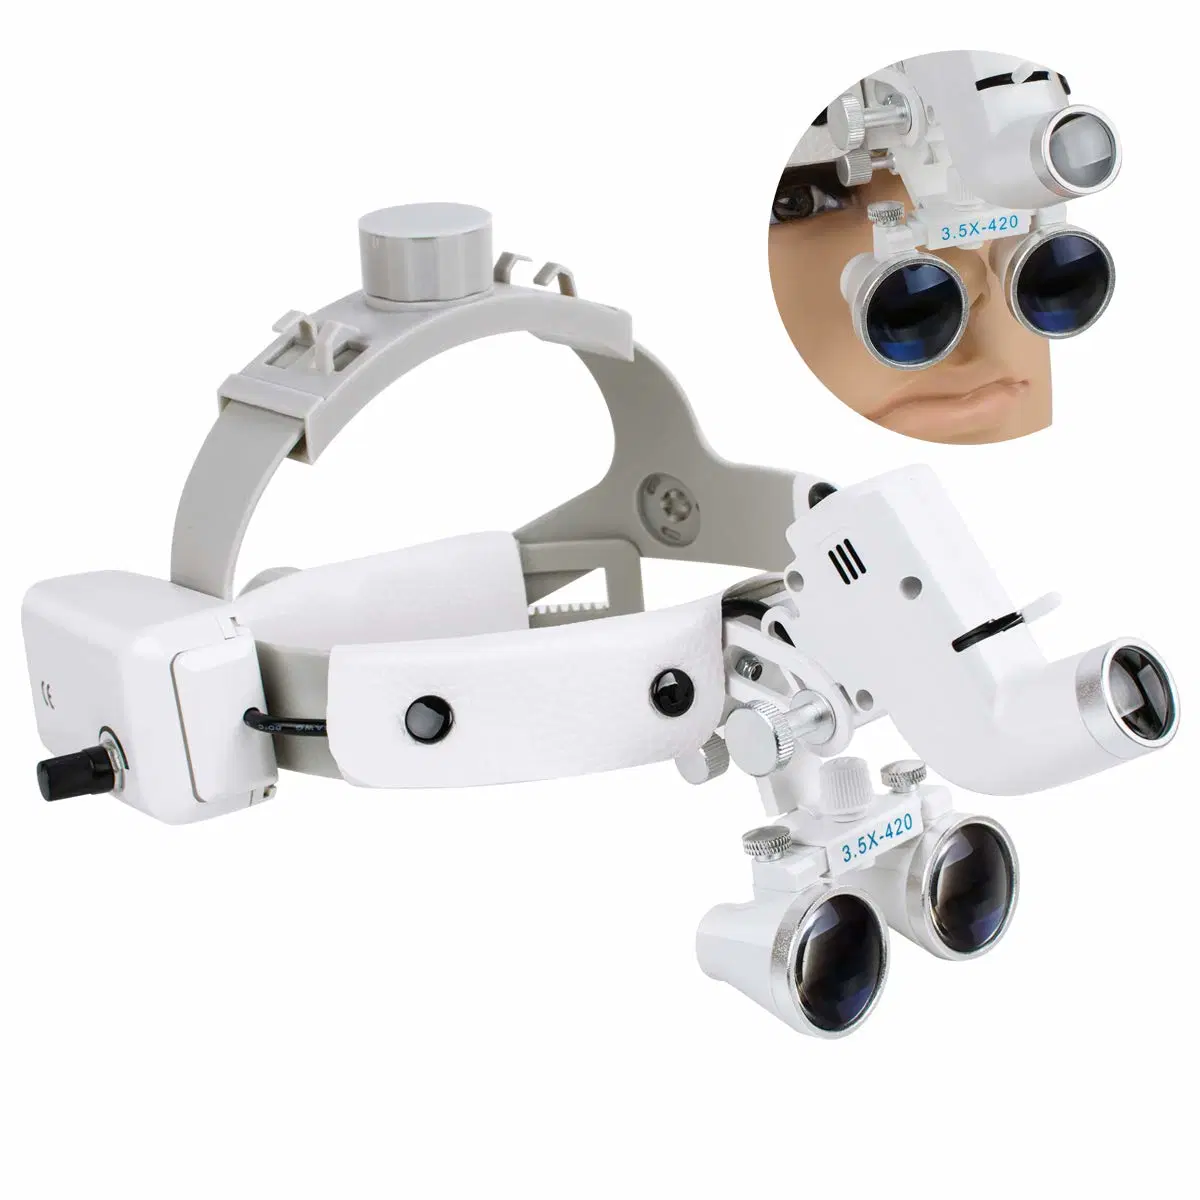 5W buena luz concentrada Lupa Binocular convergente Faro quirúrgico